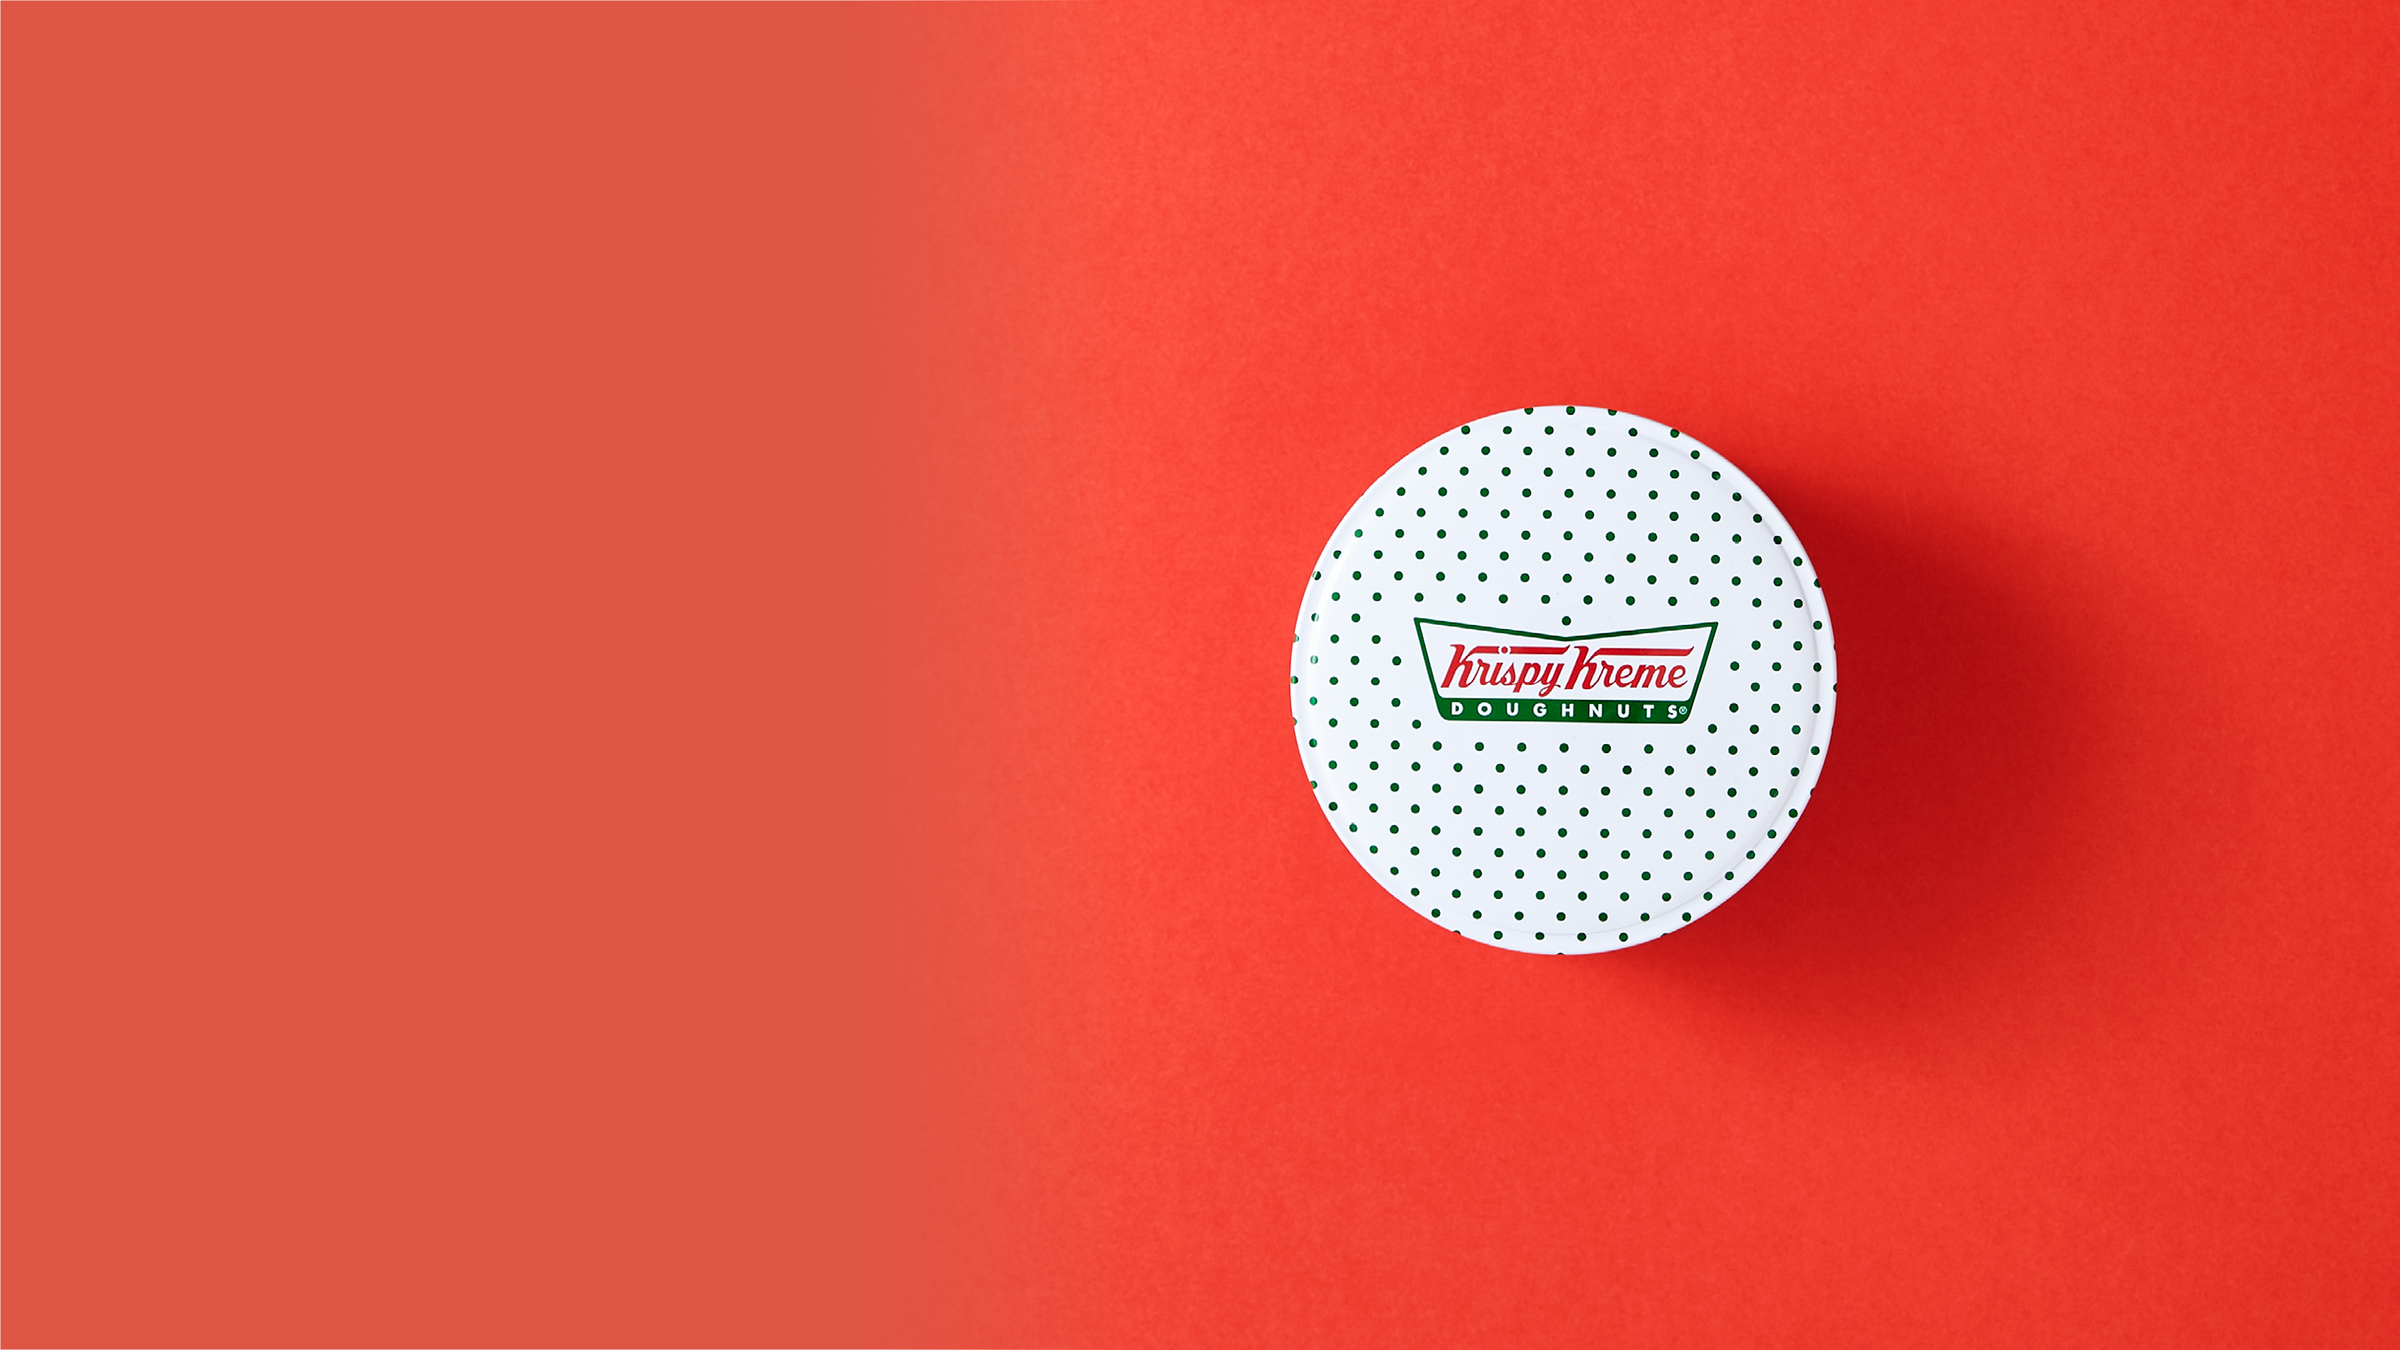 Un envase de lata de donut Krispy Kreme sobre un fondo rojo. 